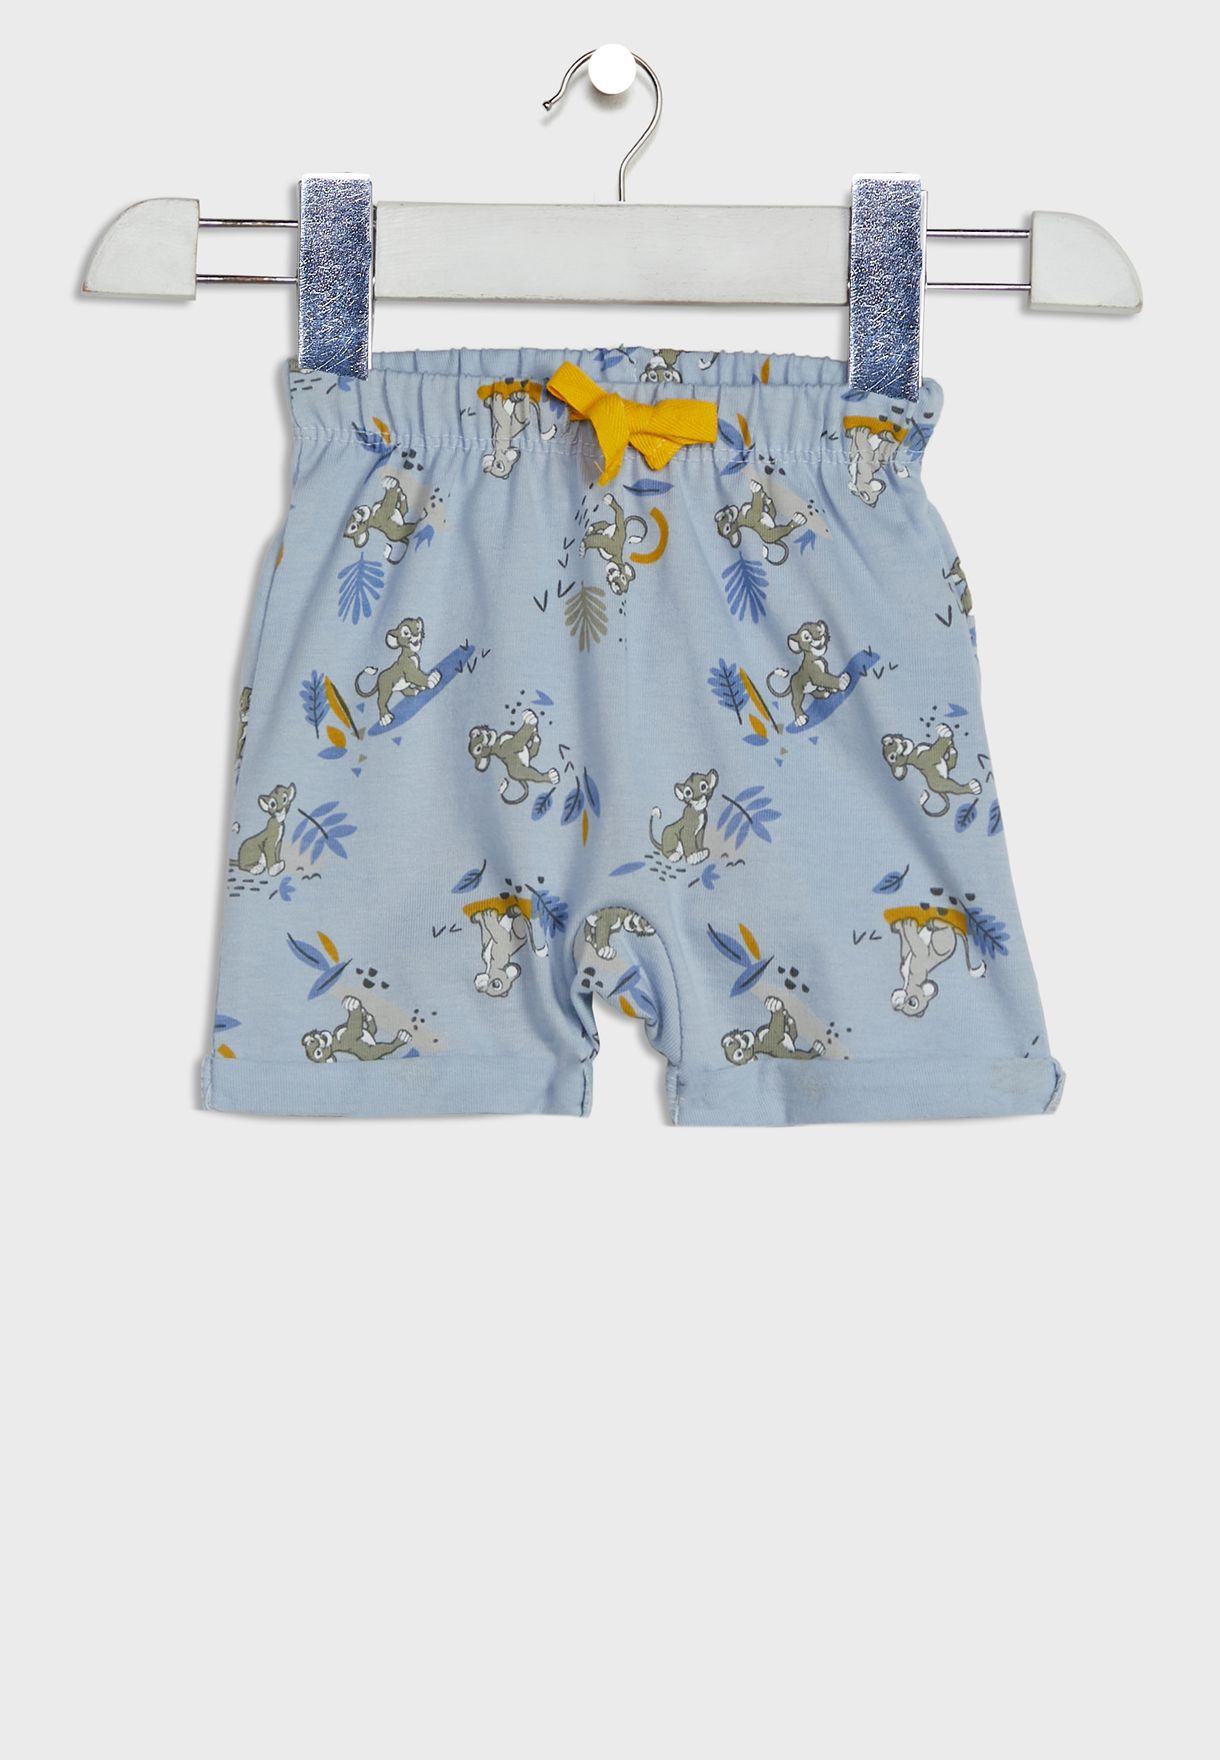 Infant Striped T-Shirt + Shorts Set